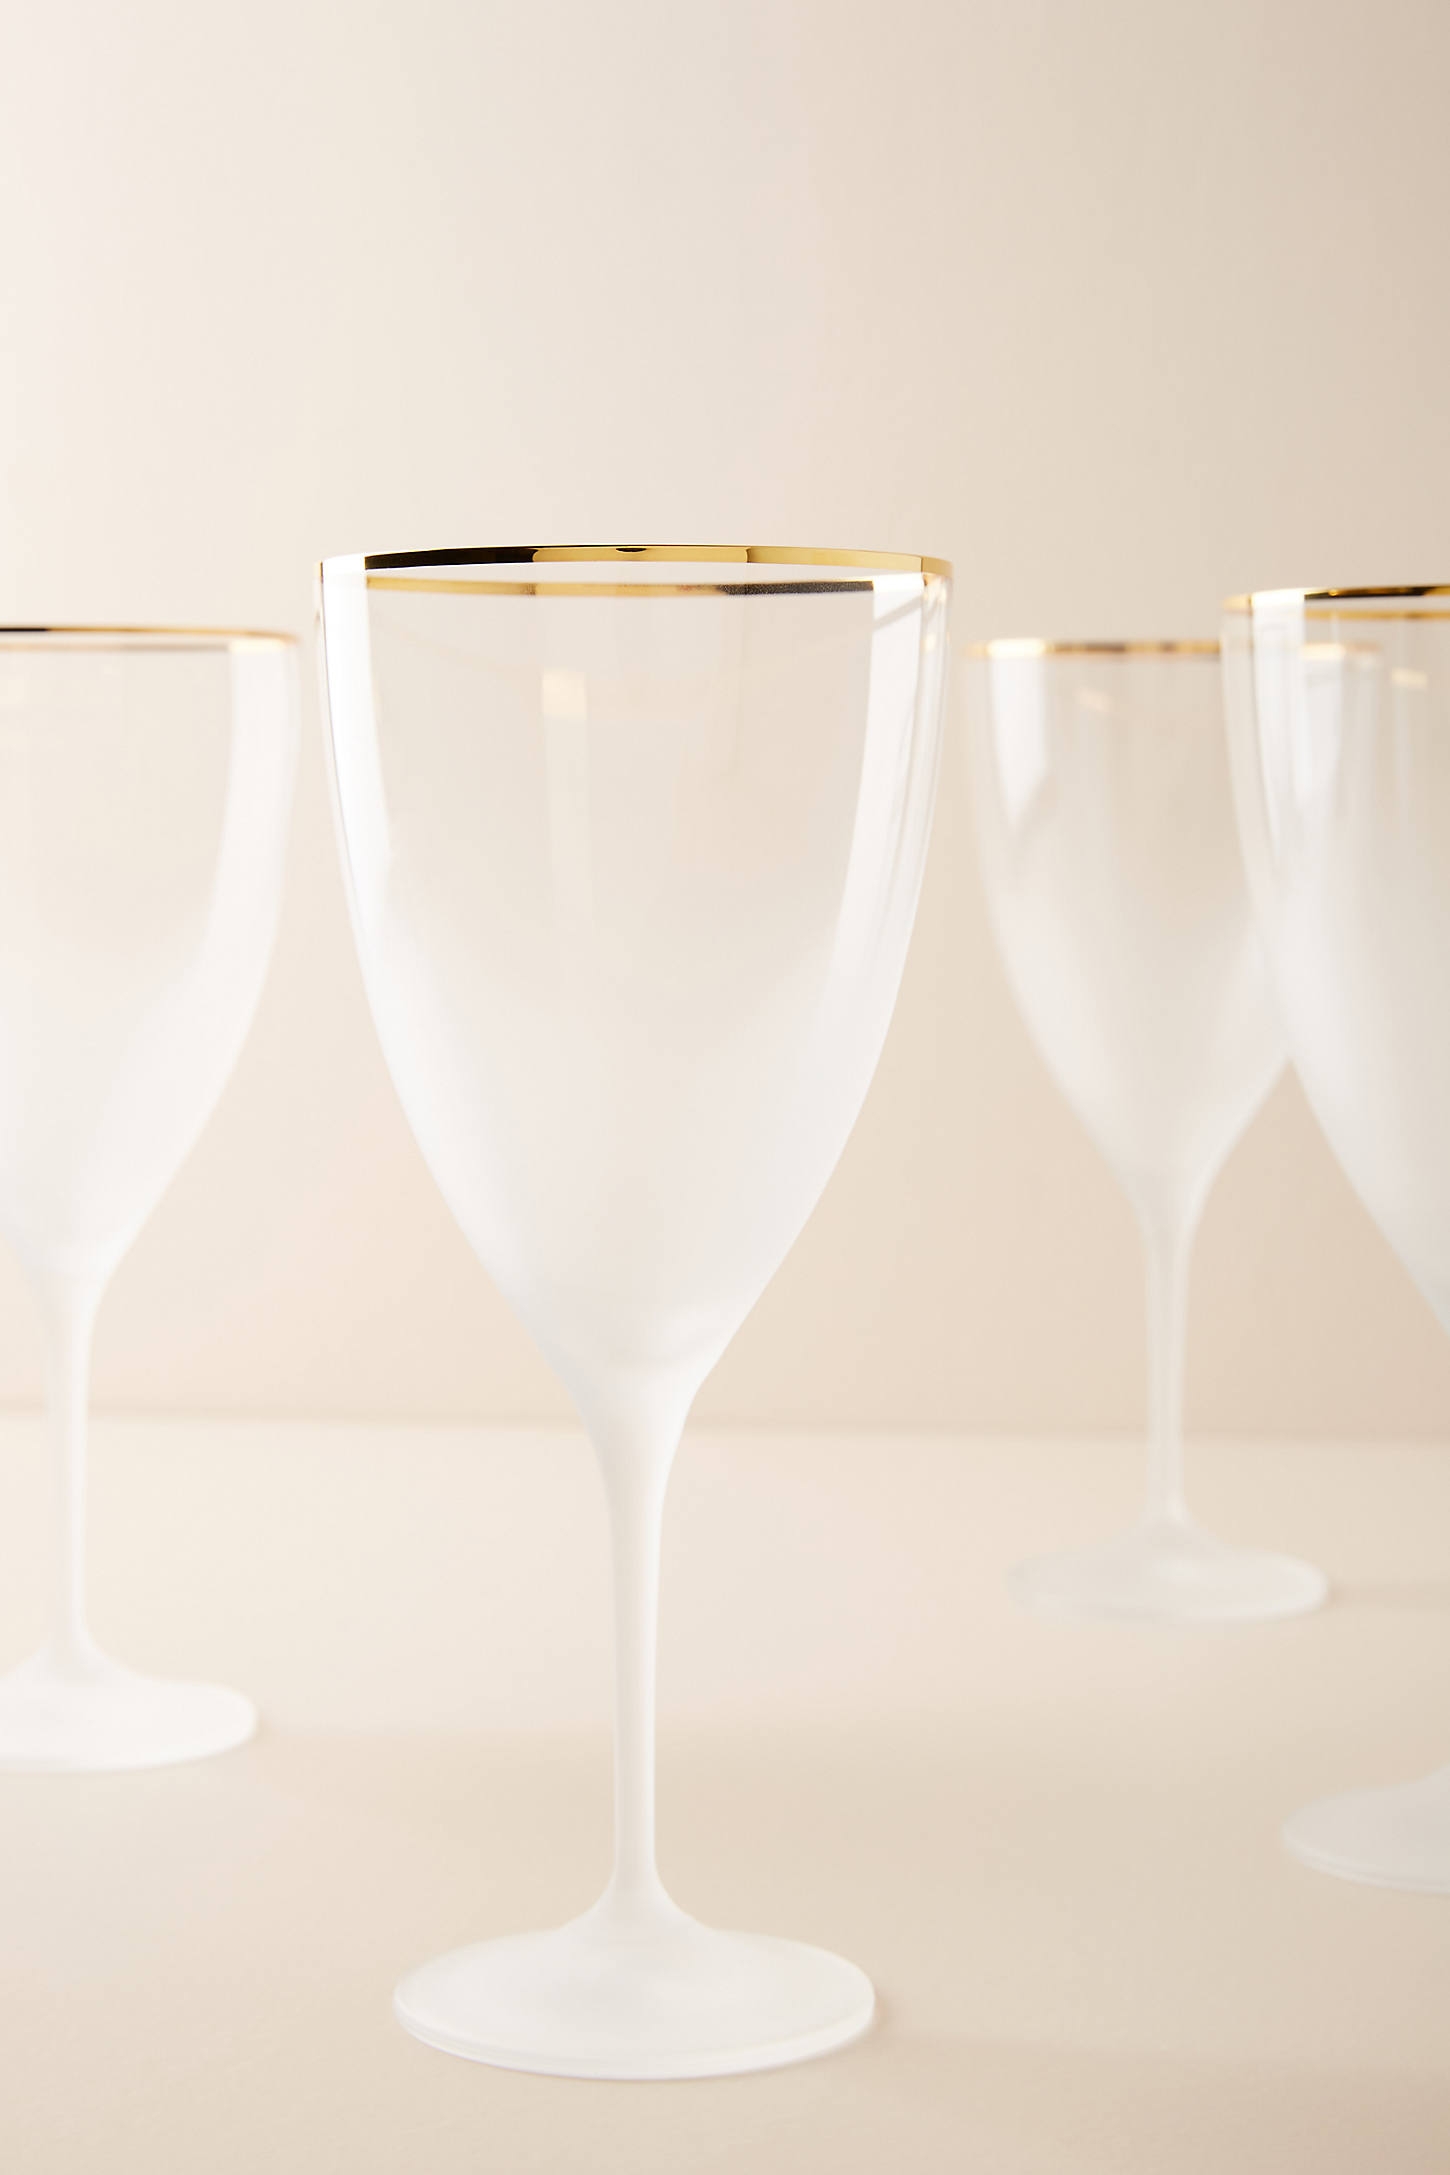 Dobra Wine Glasses, Set of 4 - Image 0